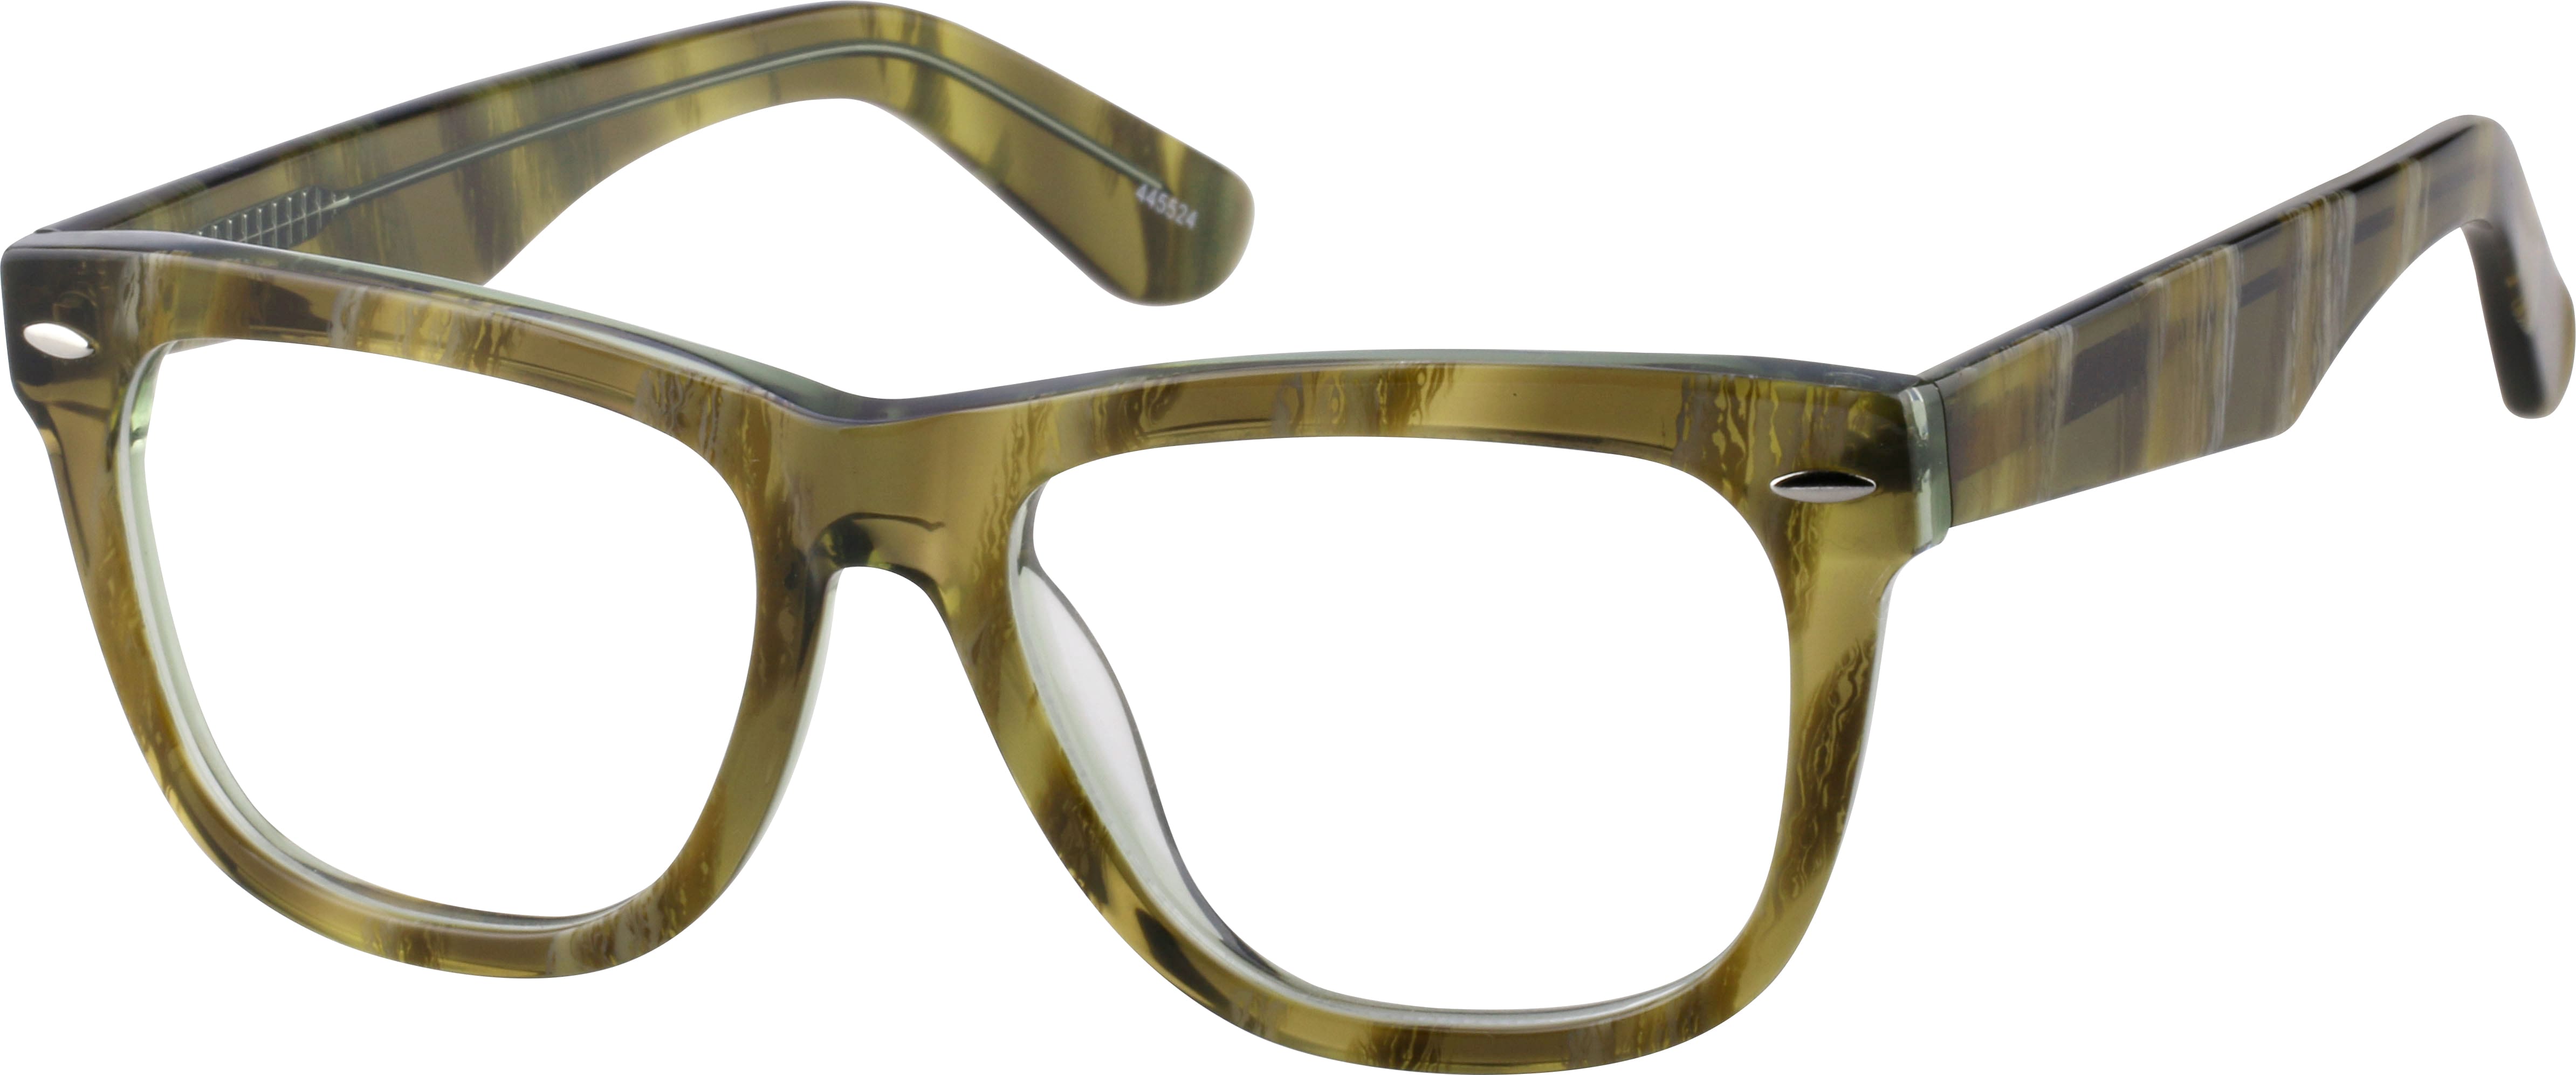 Zenni Optical Promo Code 50% off: Alamere Eyeglasses